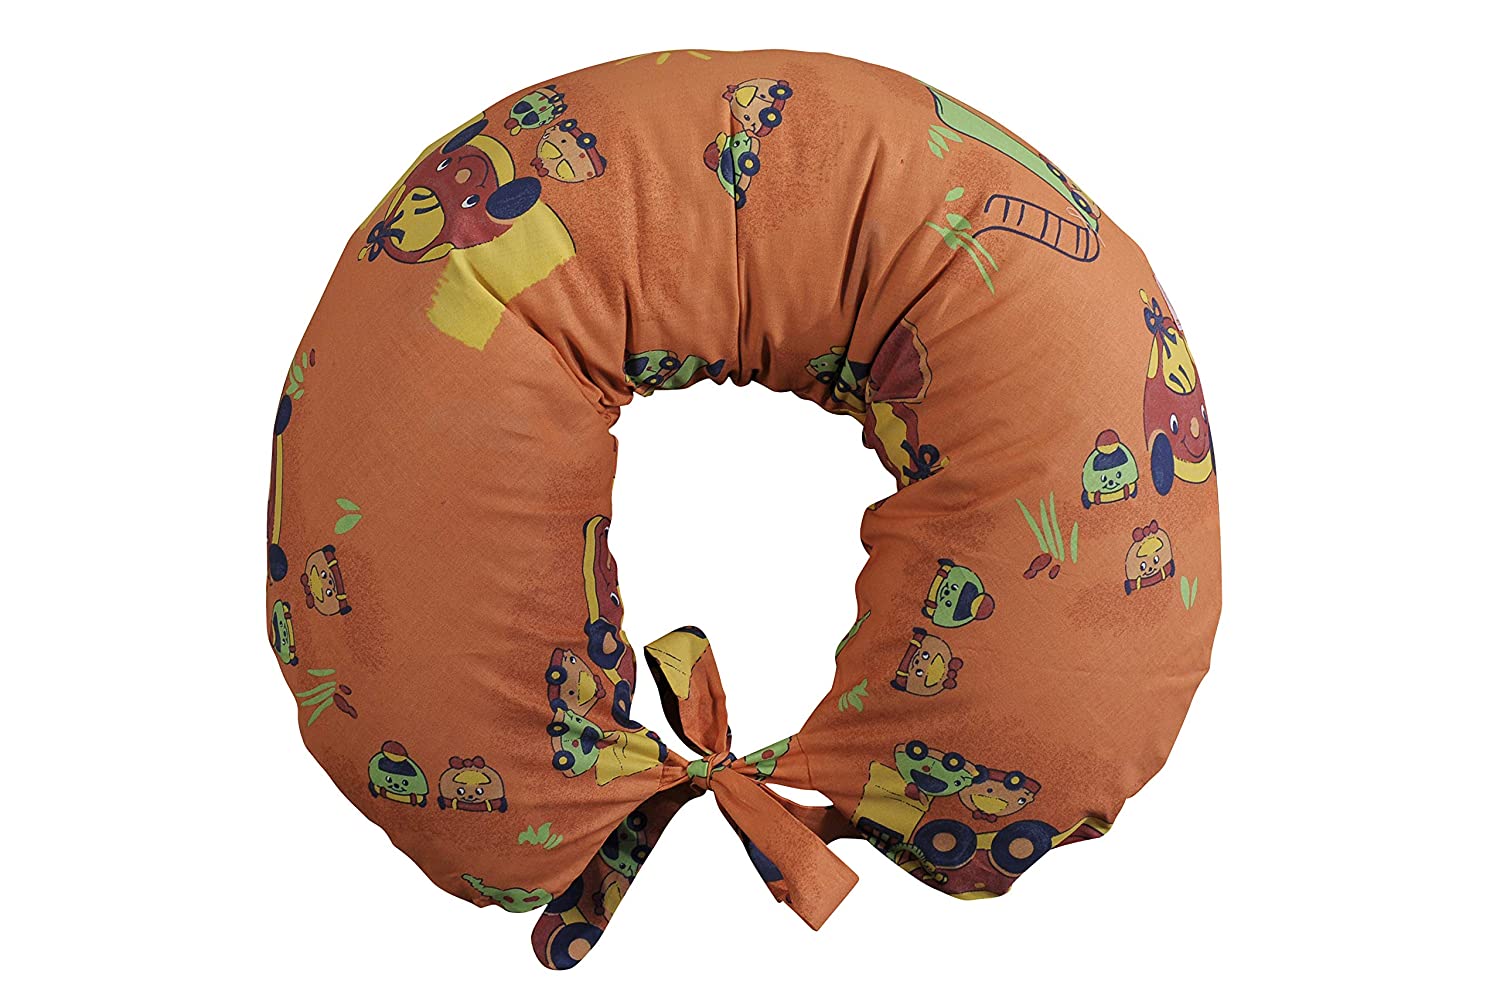 Merrymama - Replacement cover for nursing pillow 130 cm, machine orange